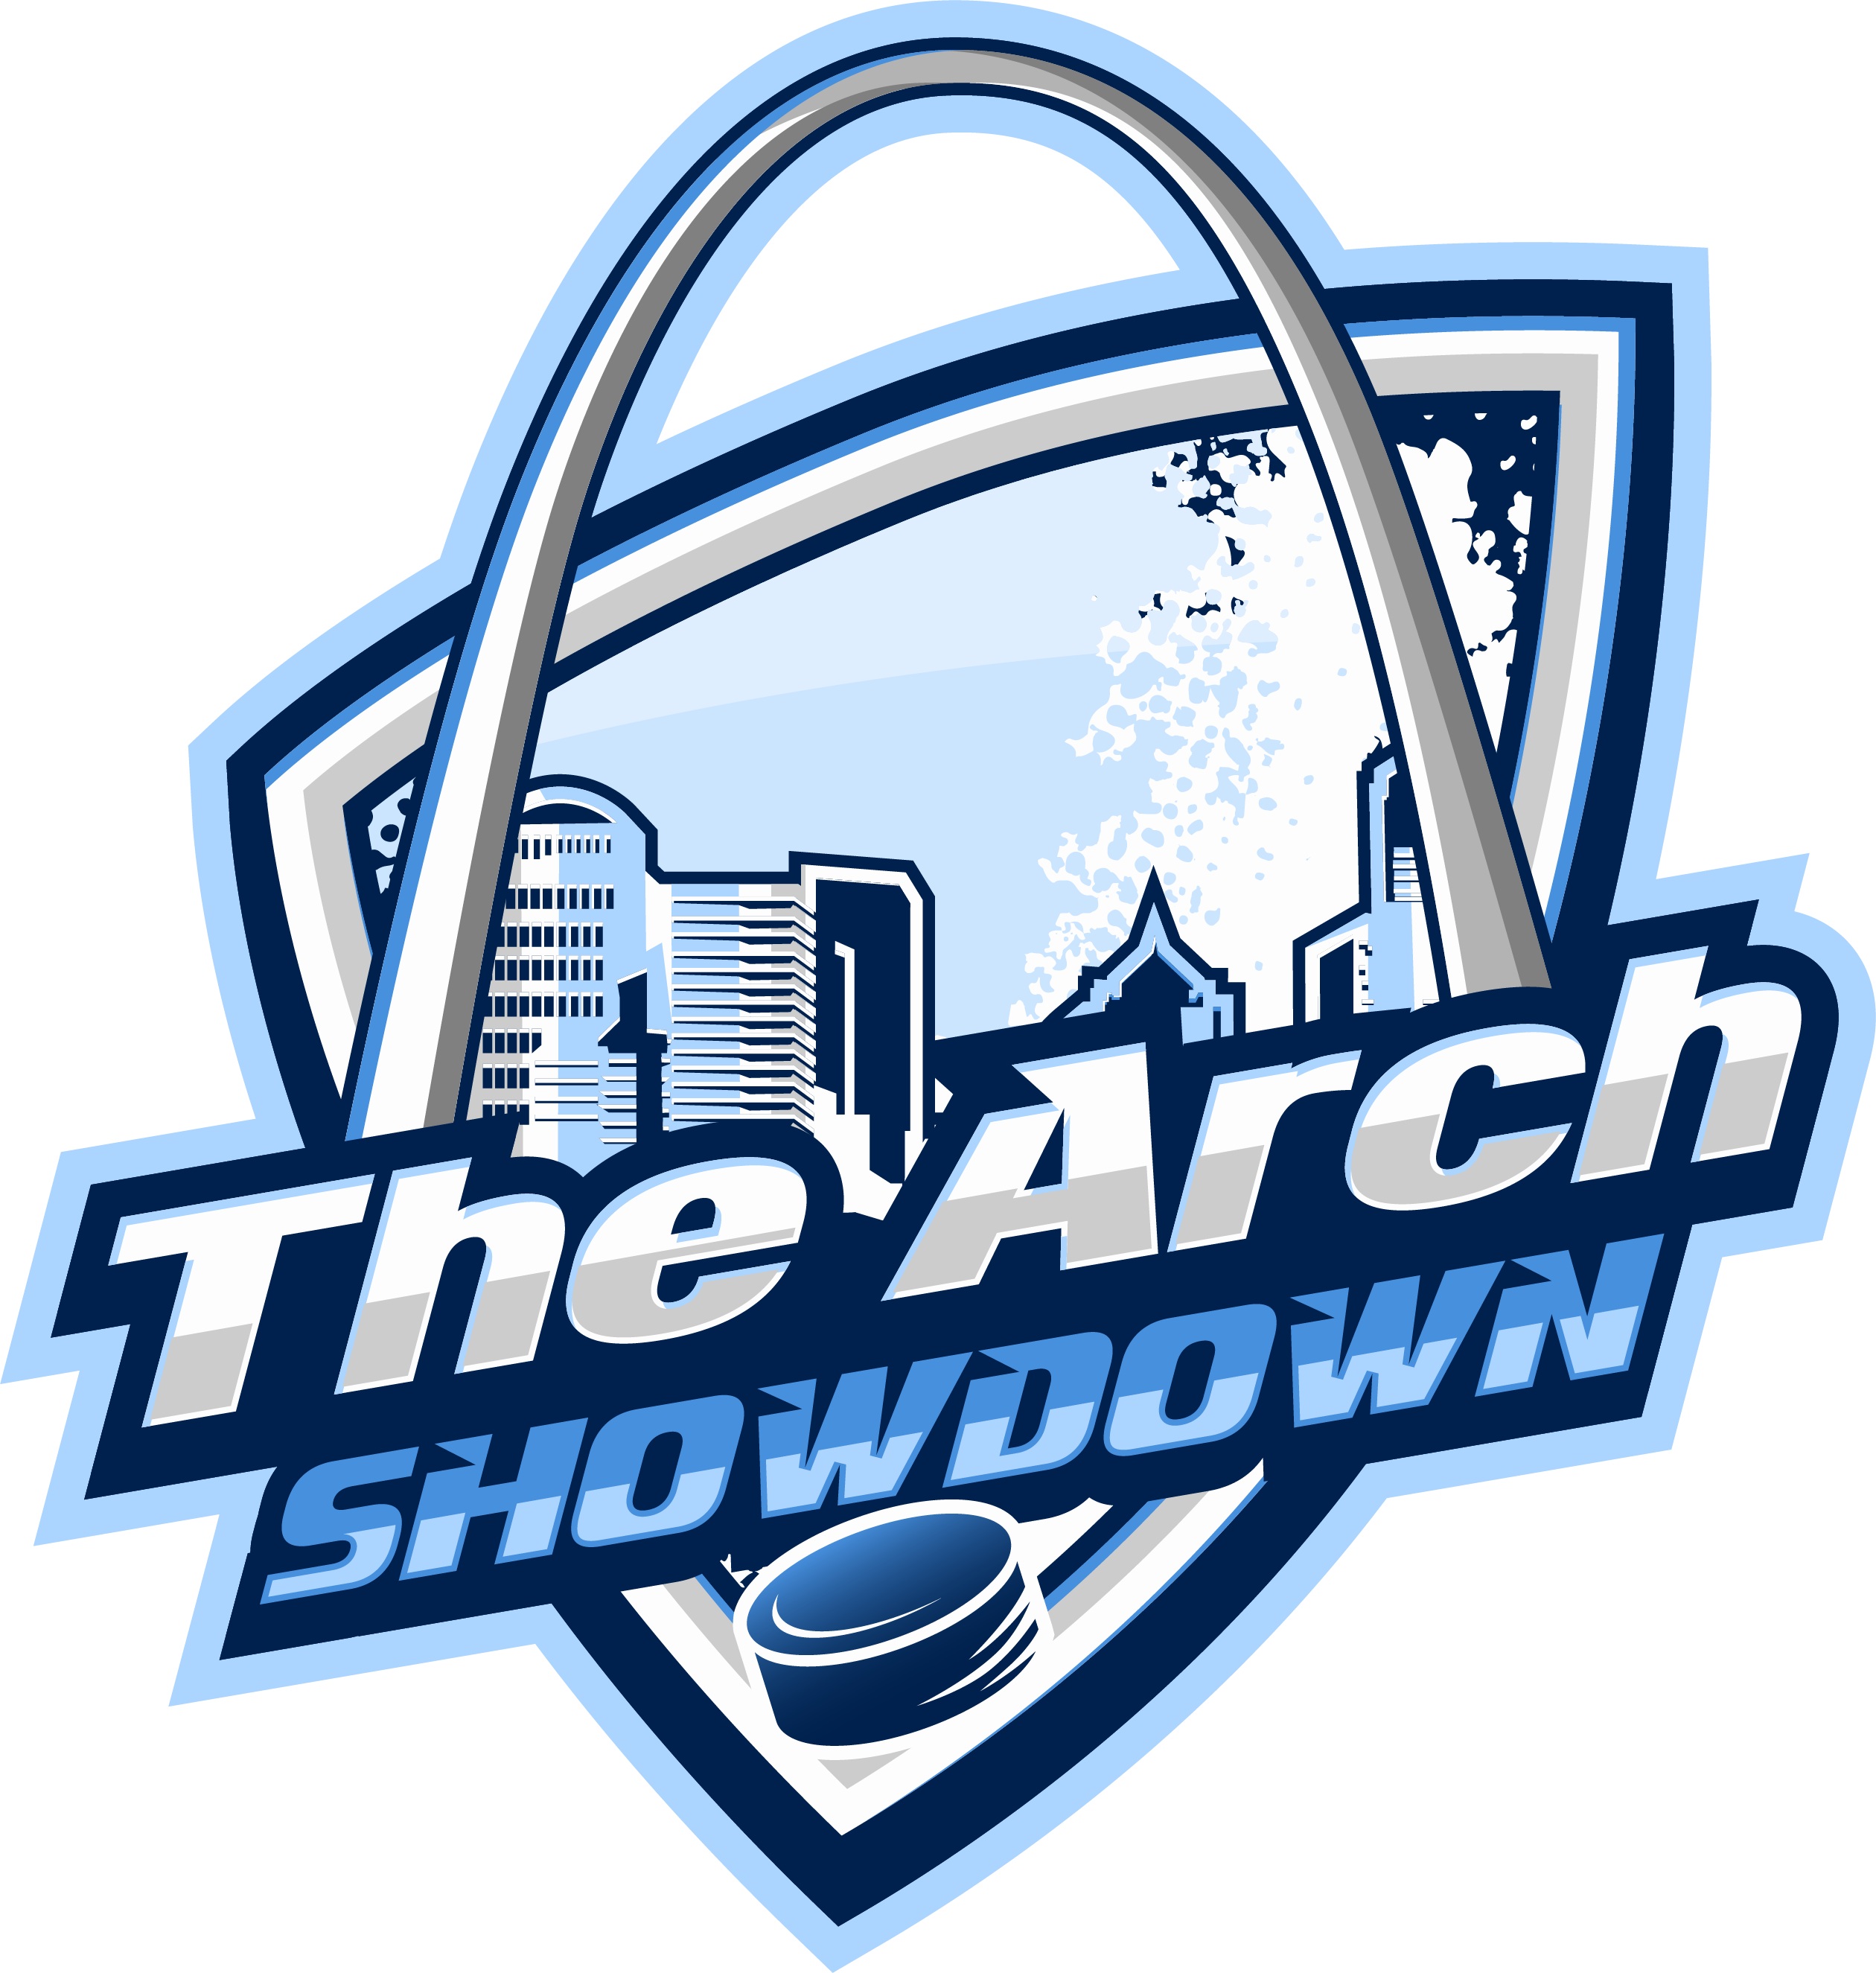 St. Louis - The Arch Showdown 24